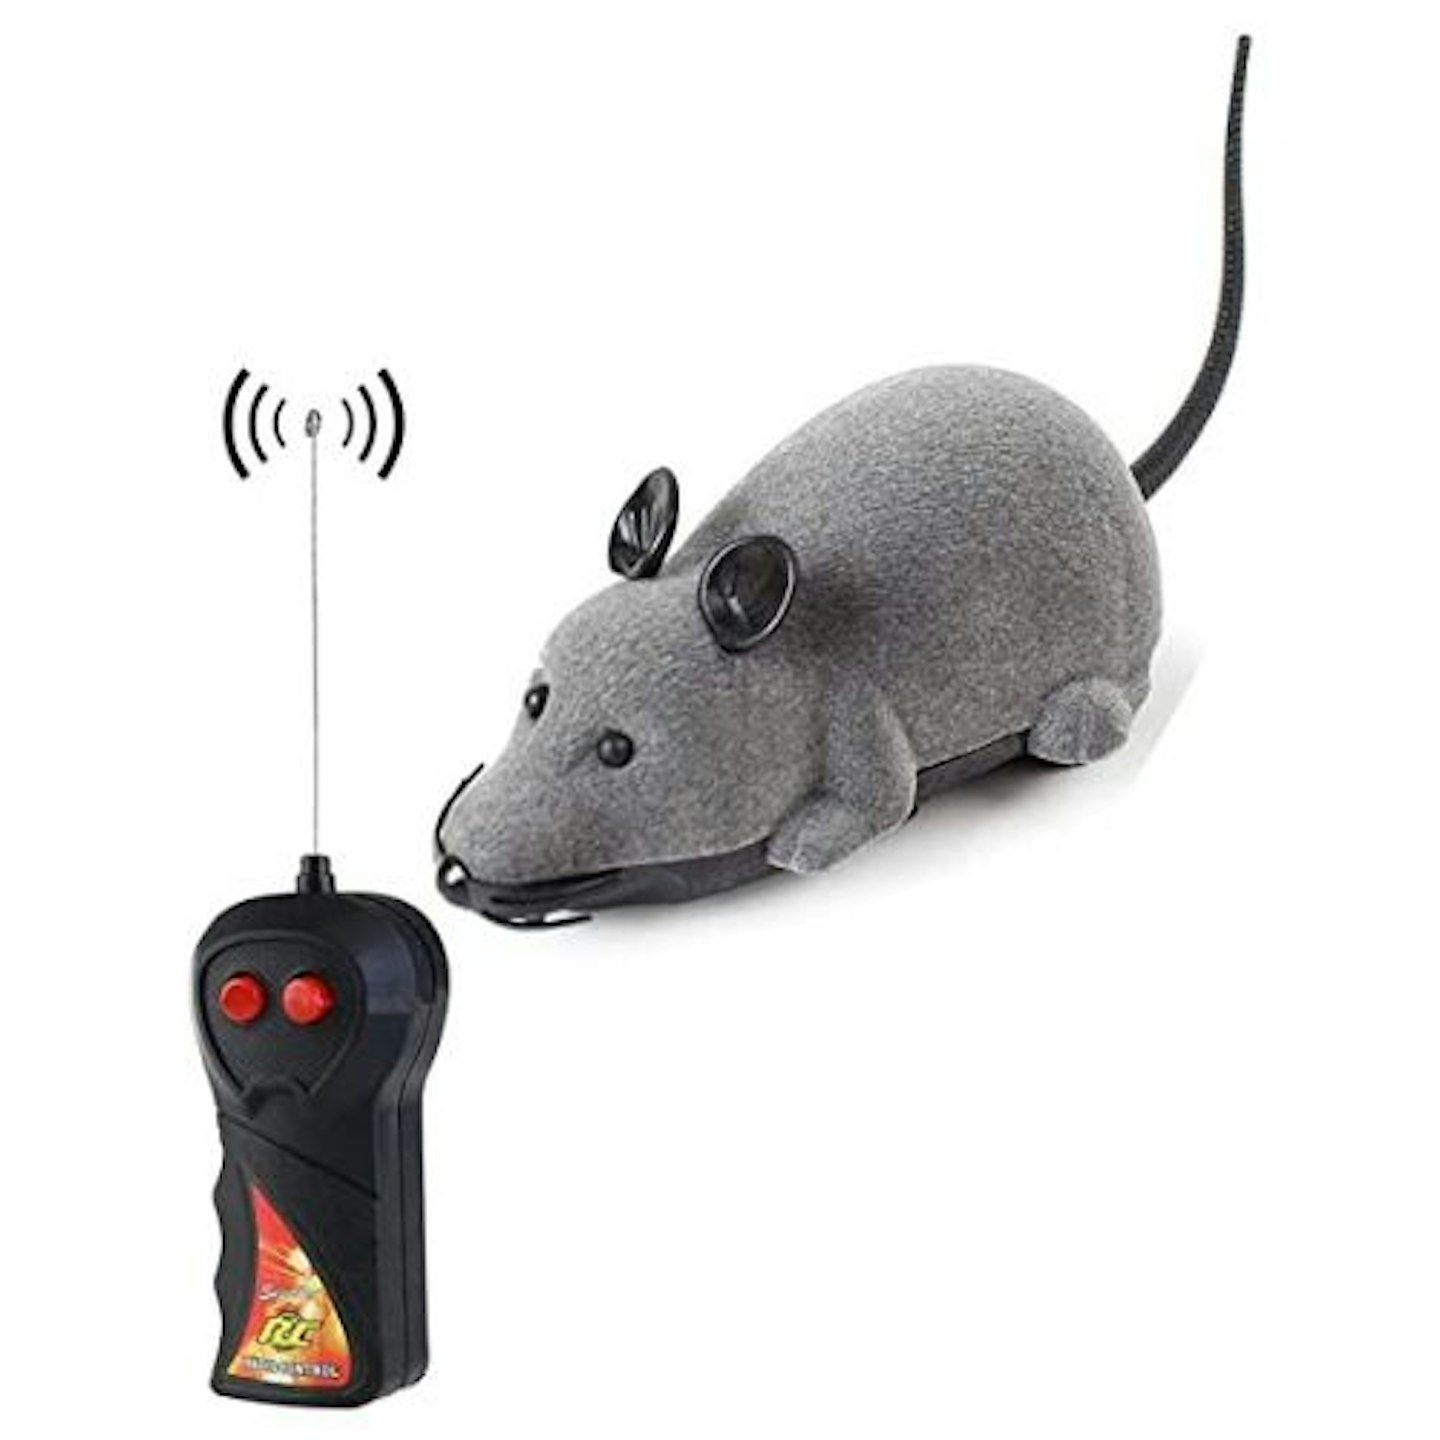 bluesees Remote Control Rat Toy